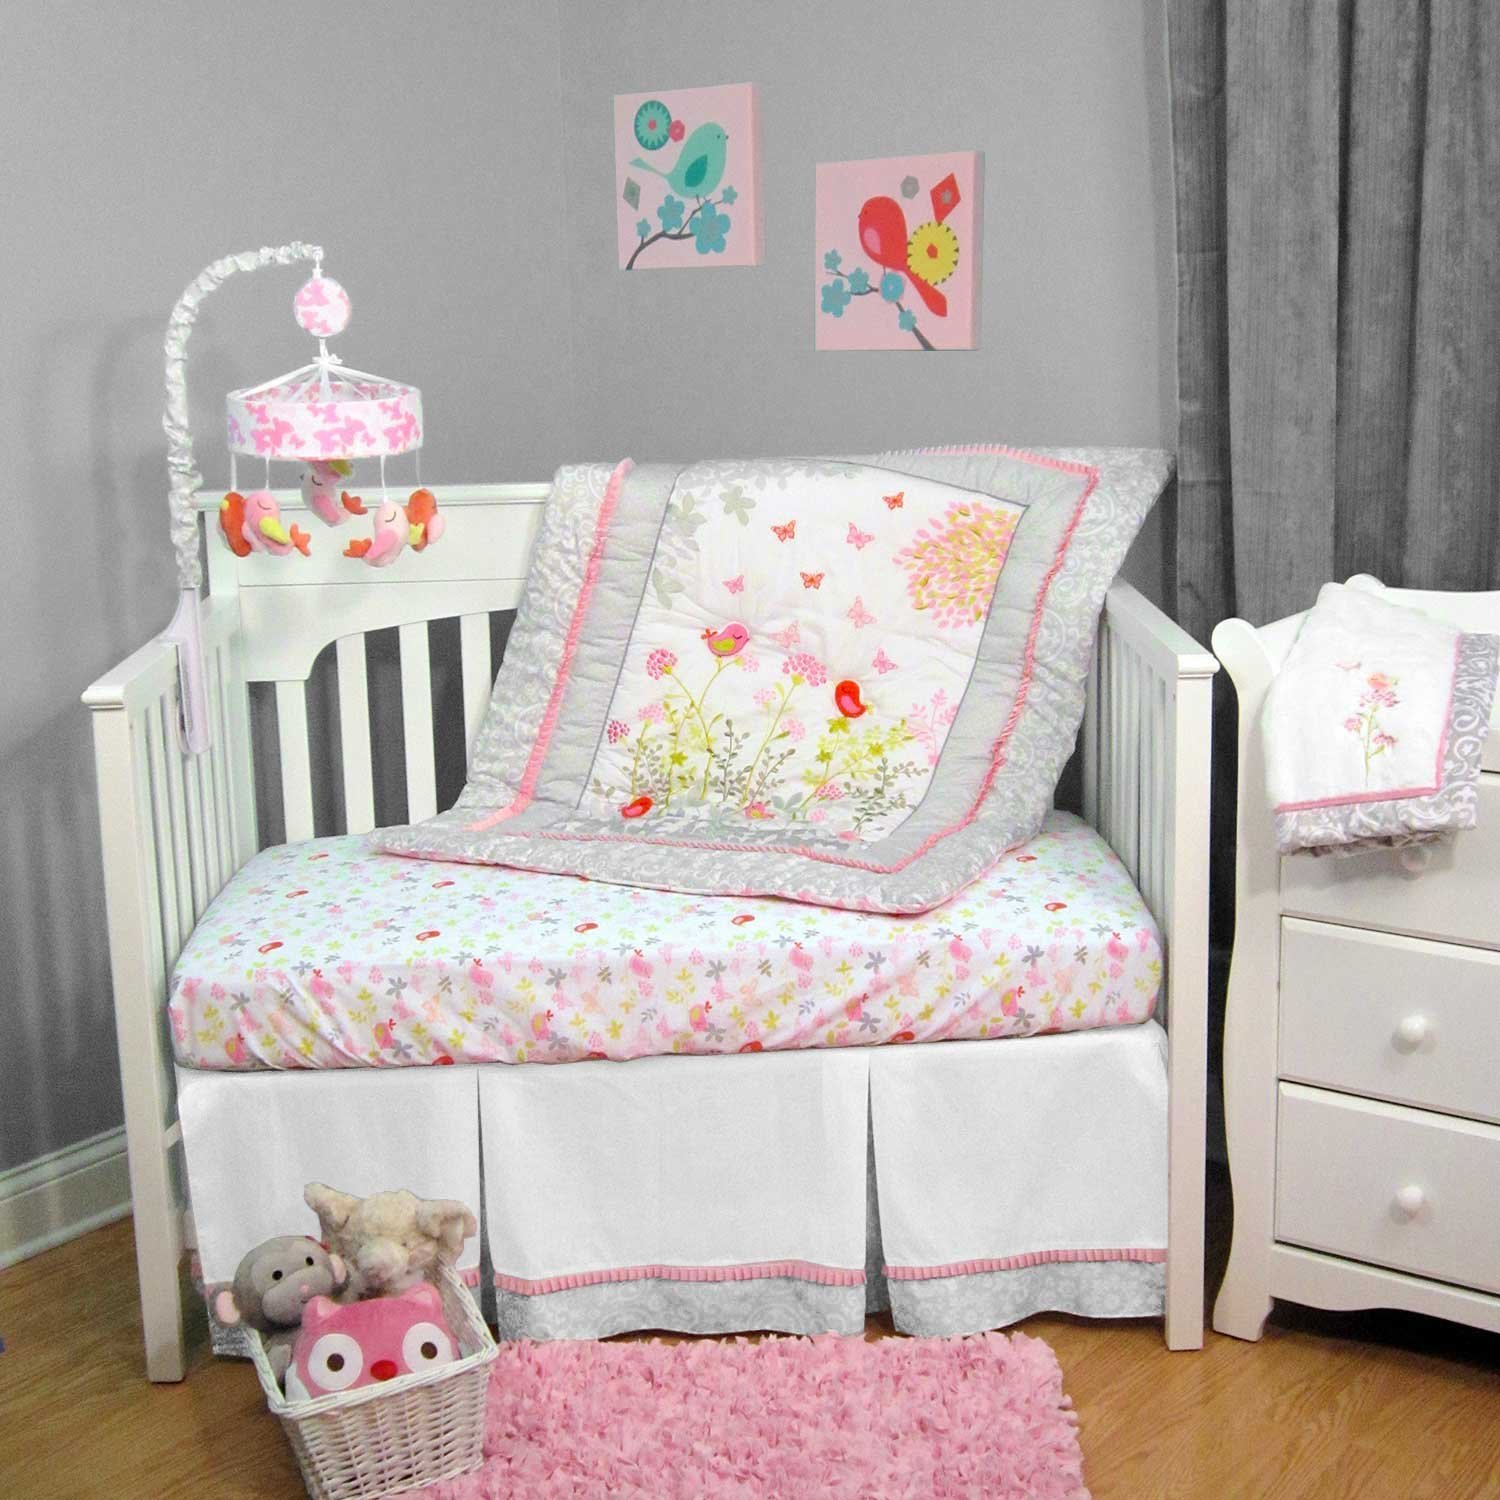 High Seas 《NEW》Just Born Baby 3-PC Crib Bedding Set 